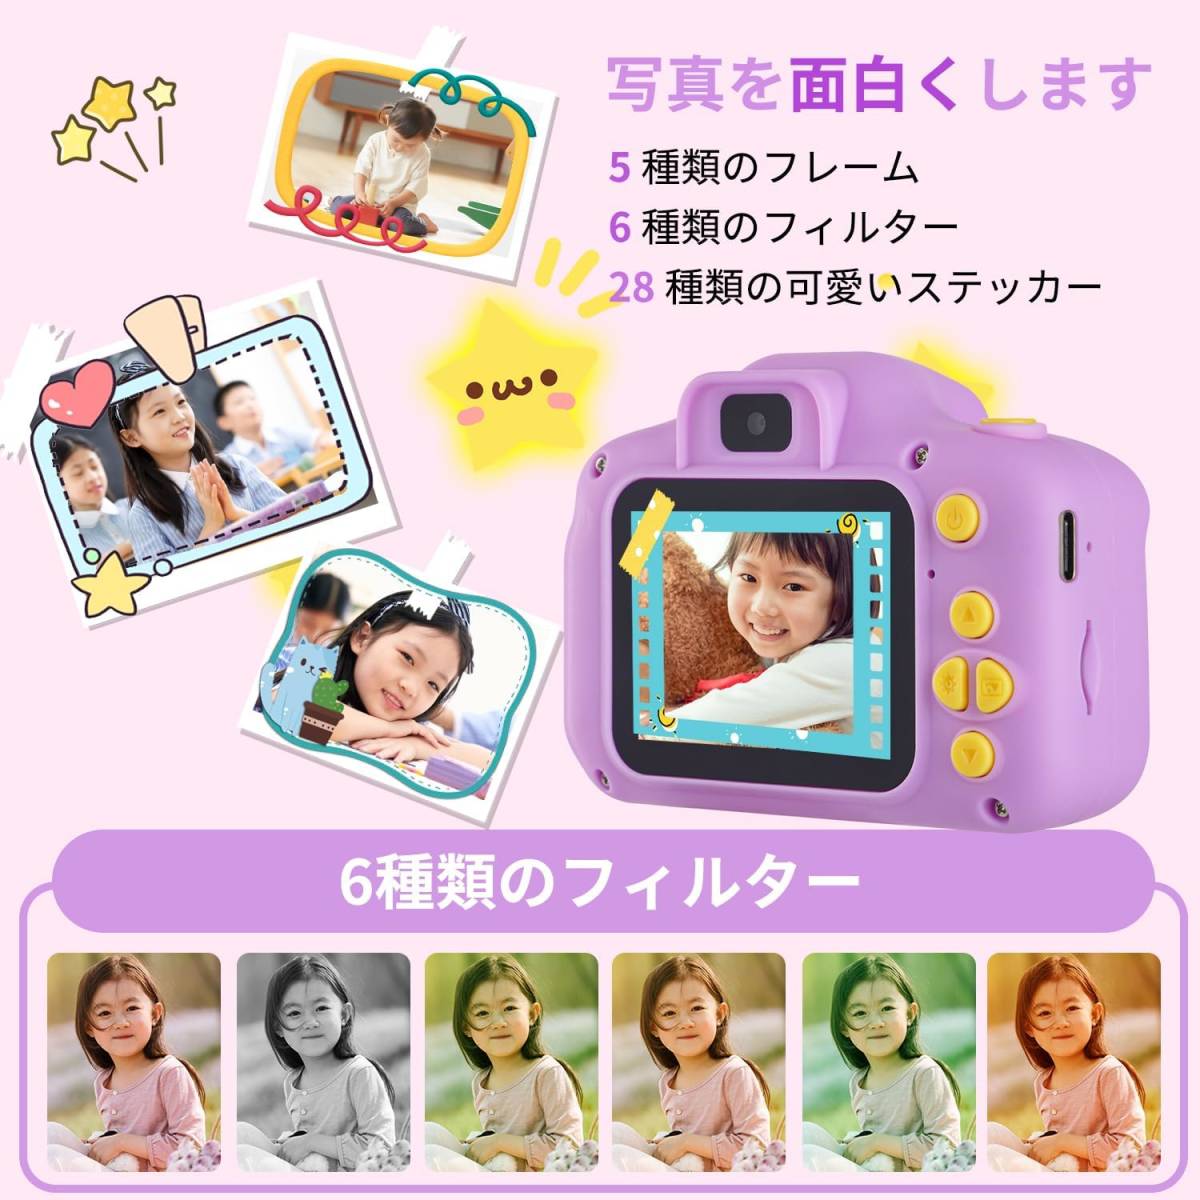 POSO キッズカメラ 子供用カメラ 子どもトイカメラTypeC充電 1080P HD 動画 子供向け録音自撮りカメラ 日本語説明書付き(パープル)_画像6